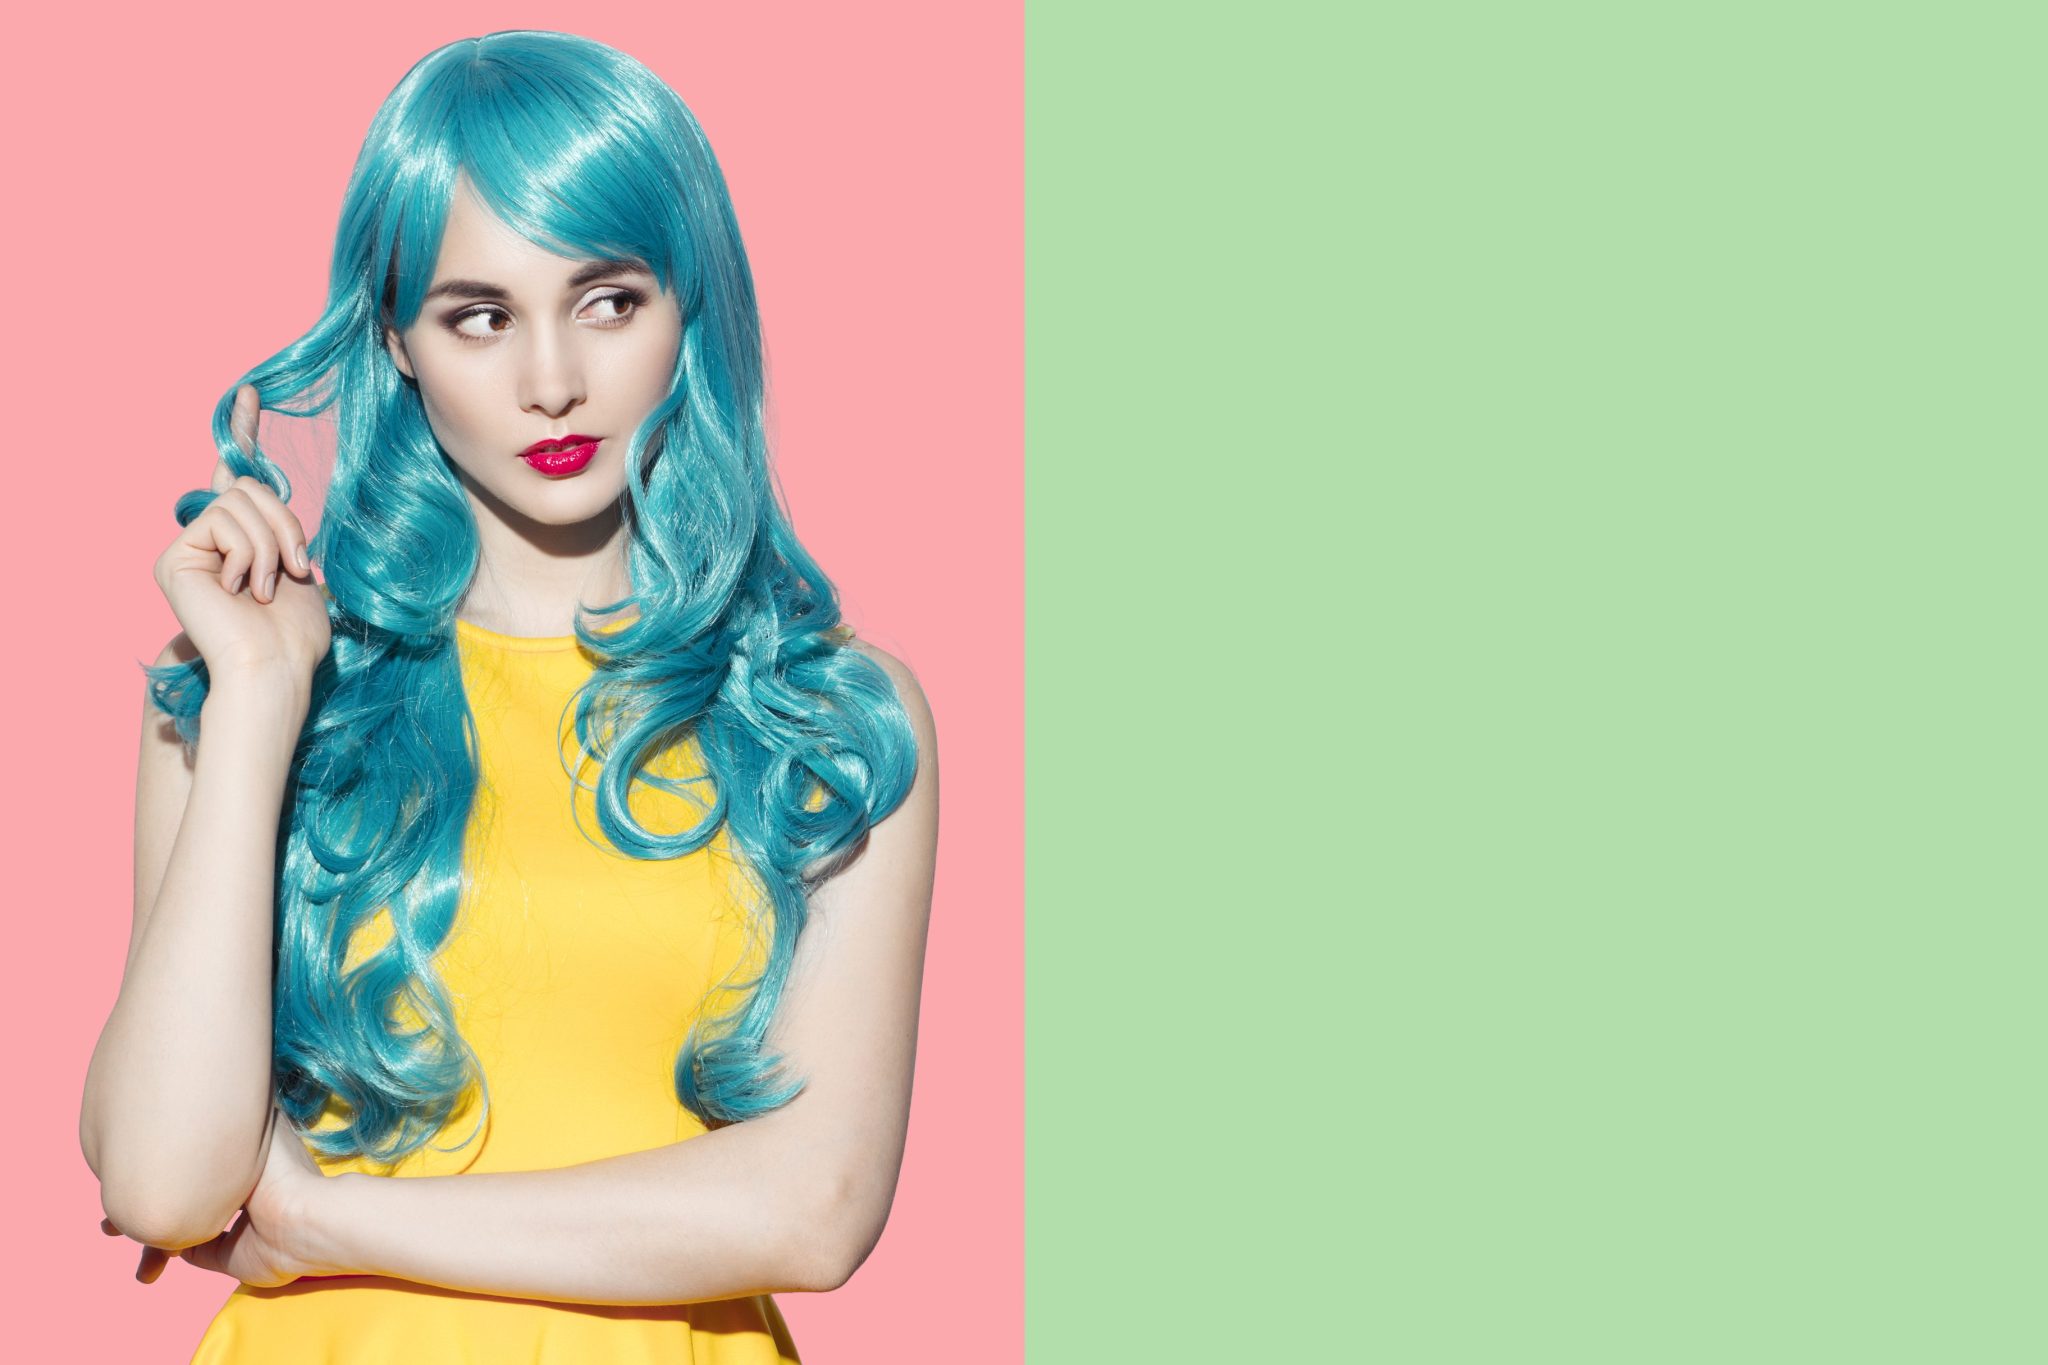 2. "10 Stunning Light Teal Blue Hair Color Ideas" - wide 3